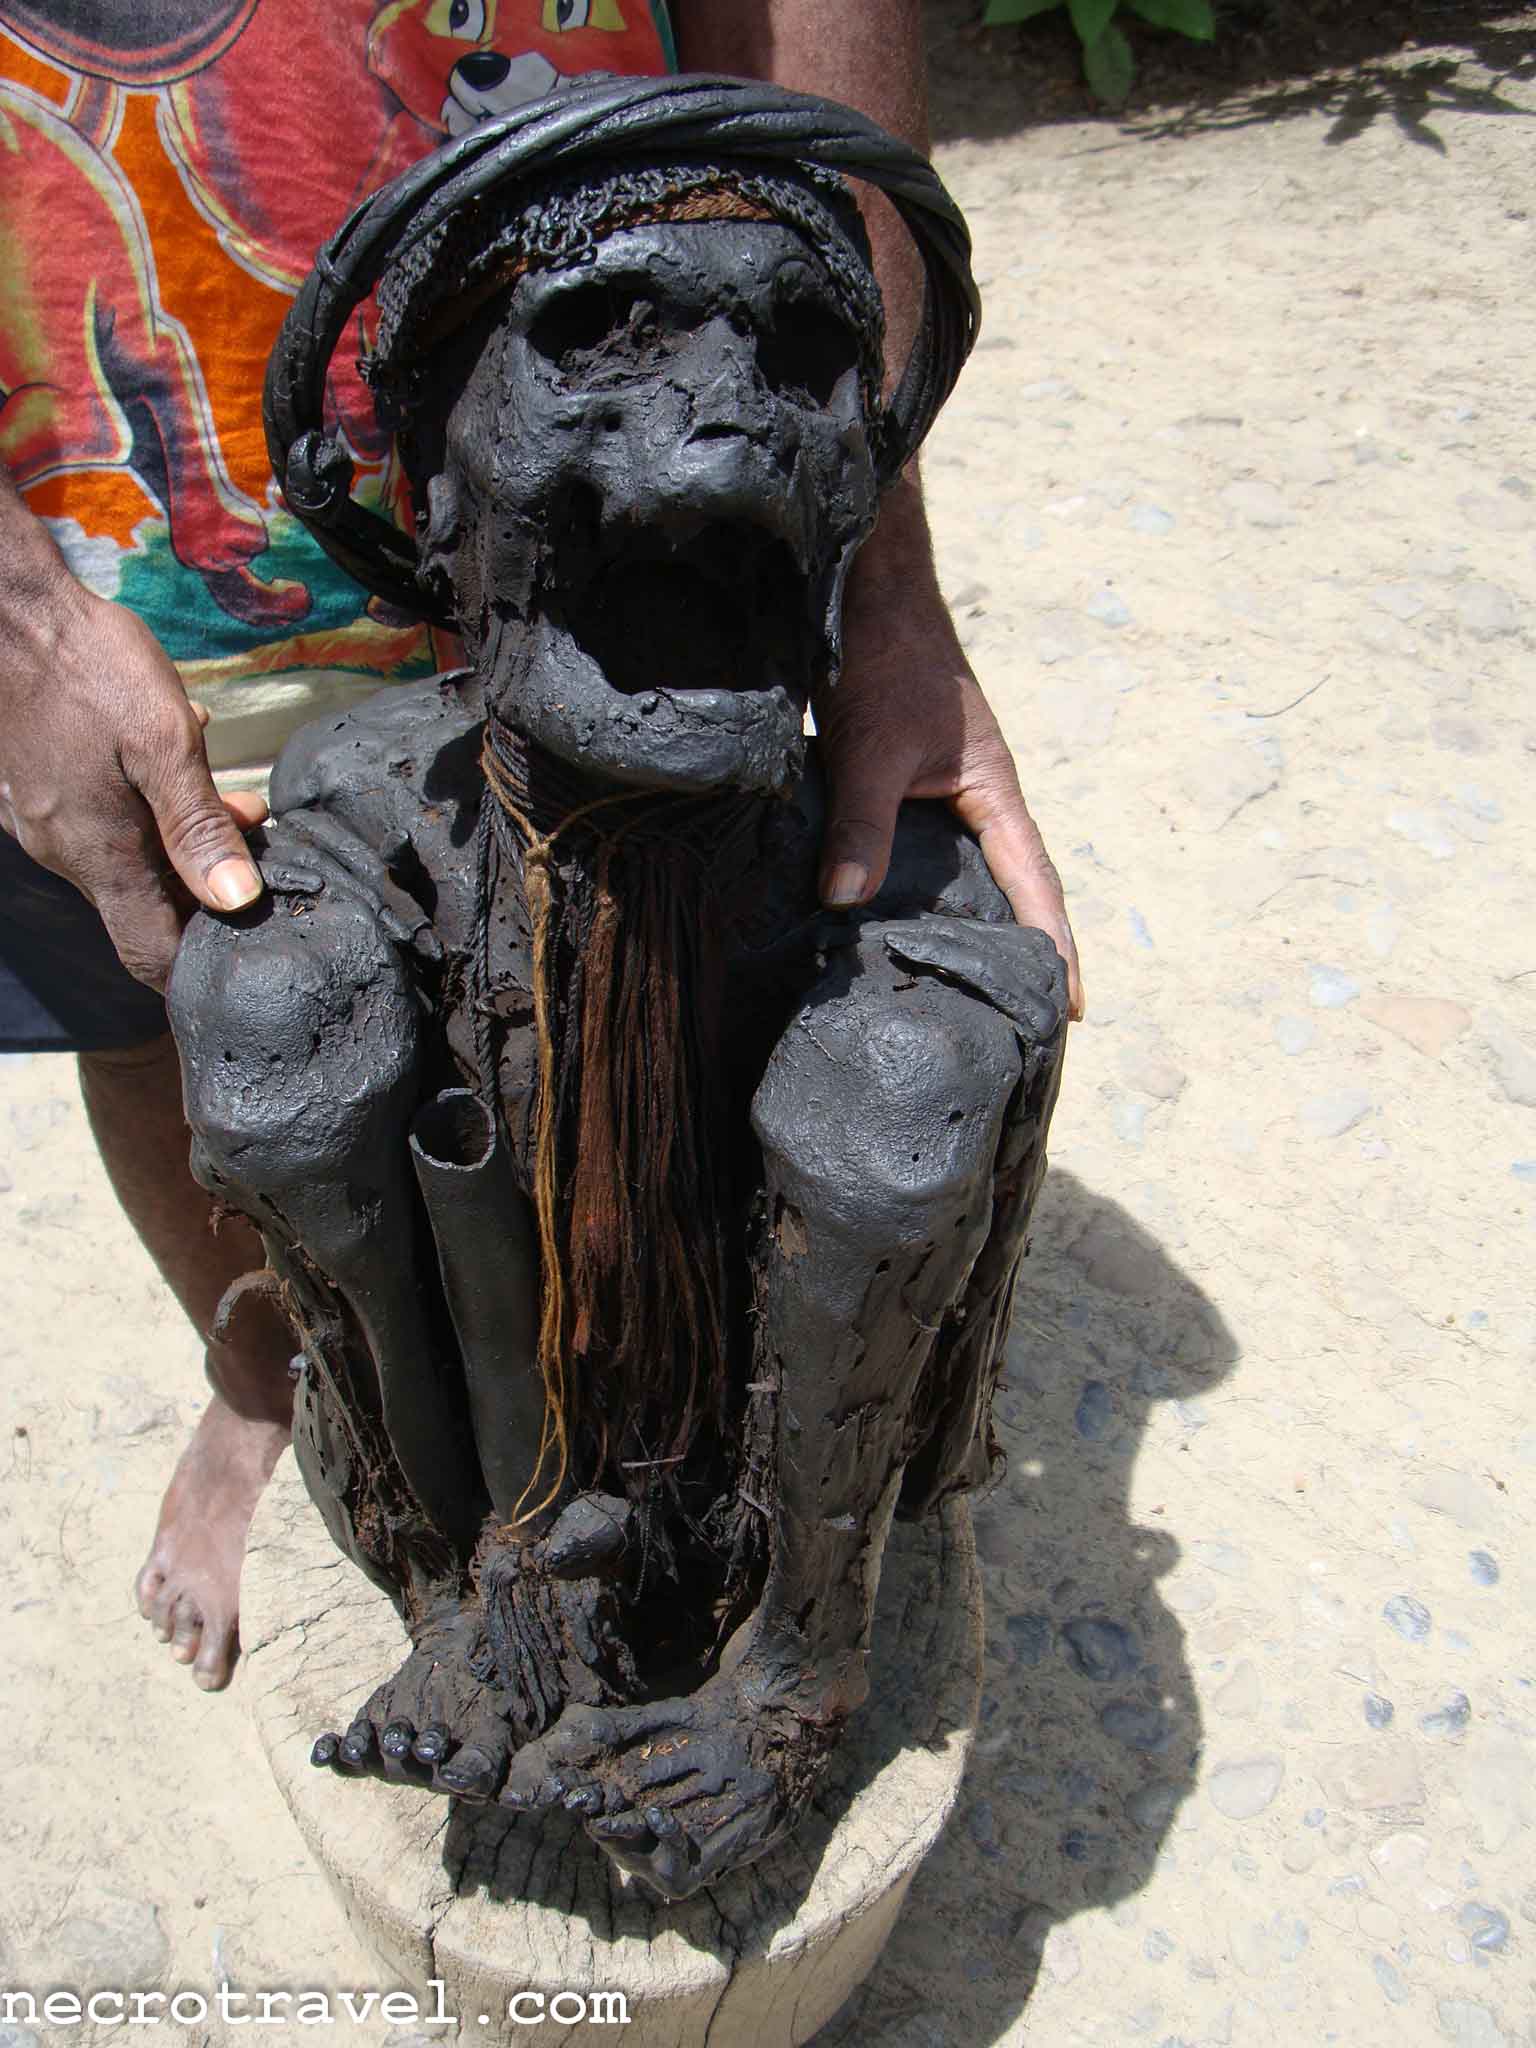 Indonesian Tribe Mummifies Their Ancestors With Smoke_2